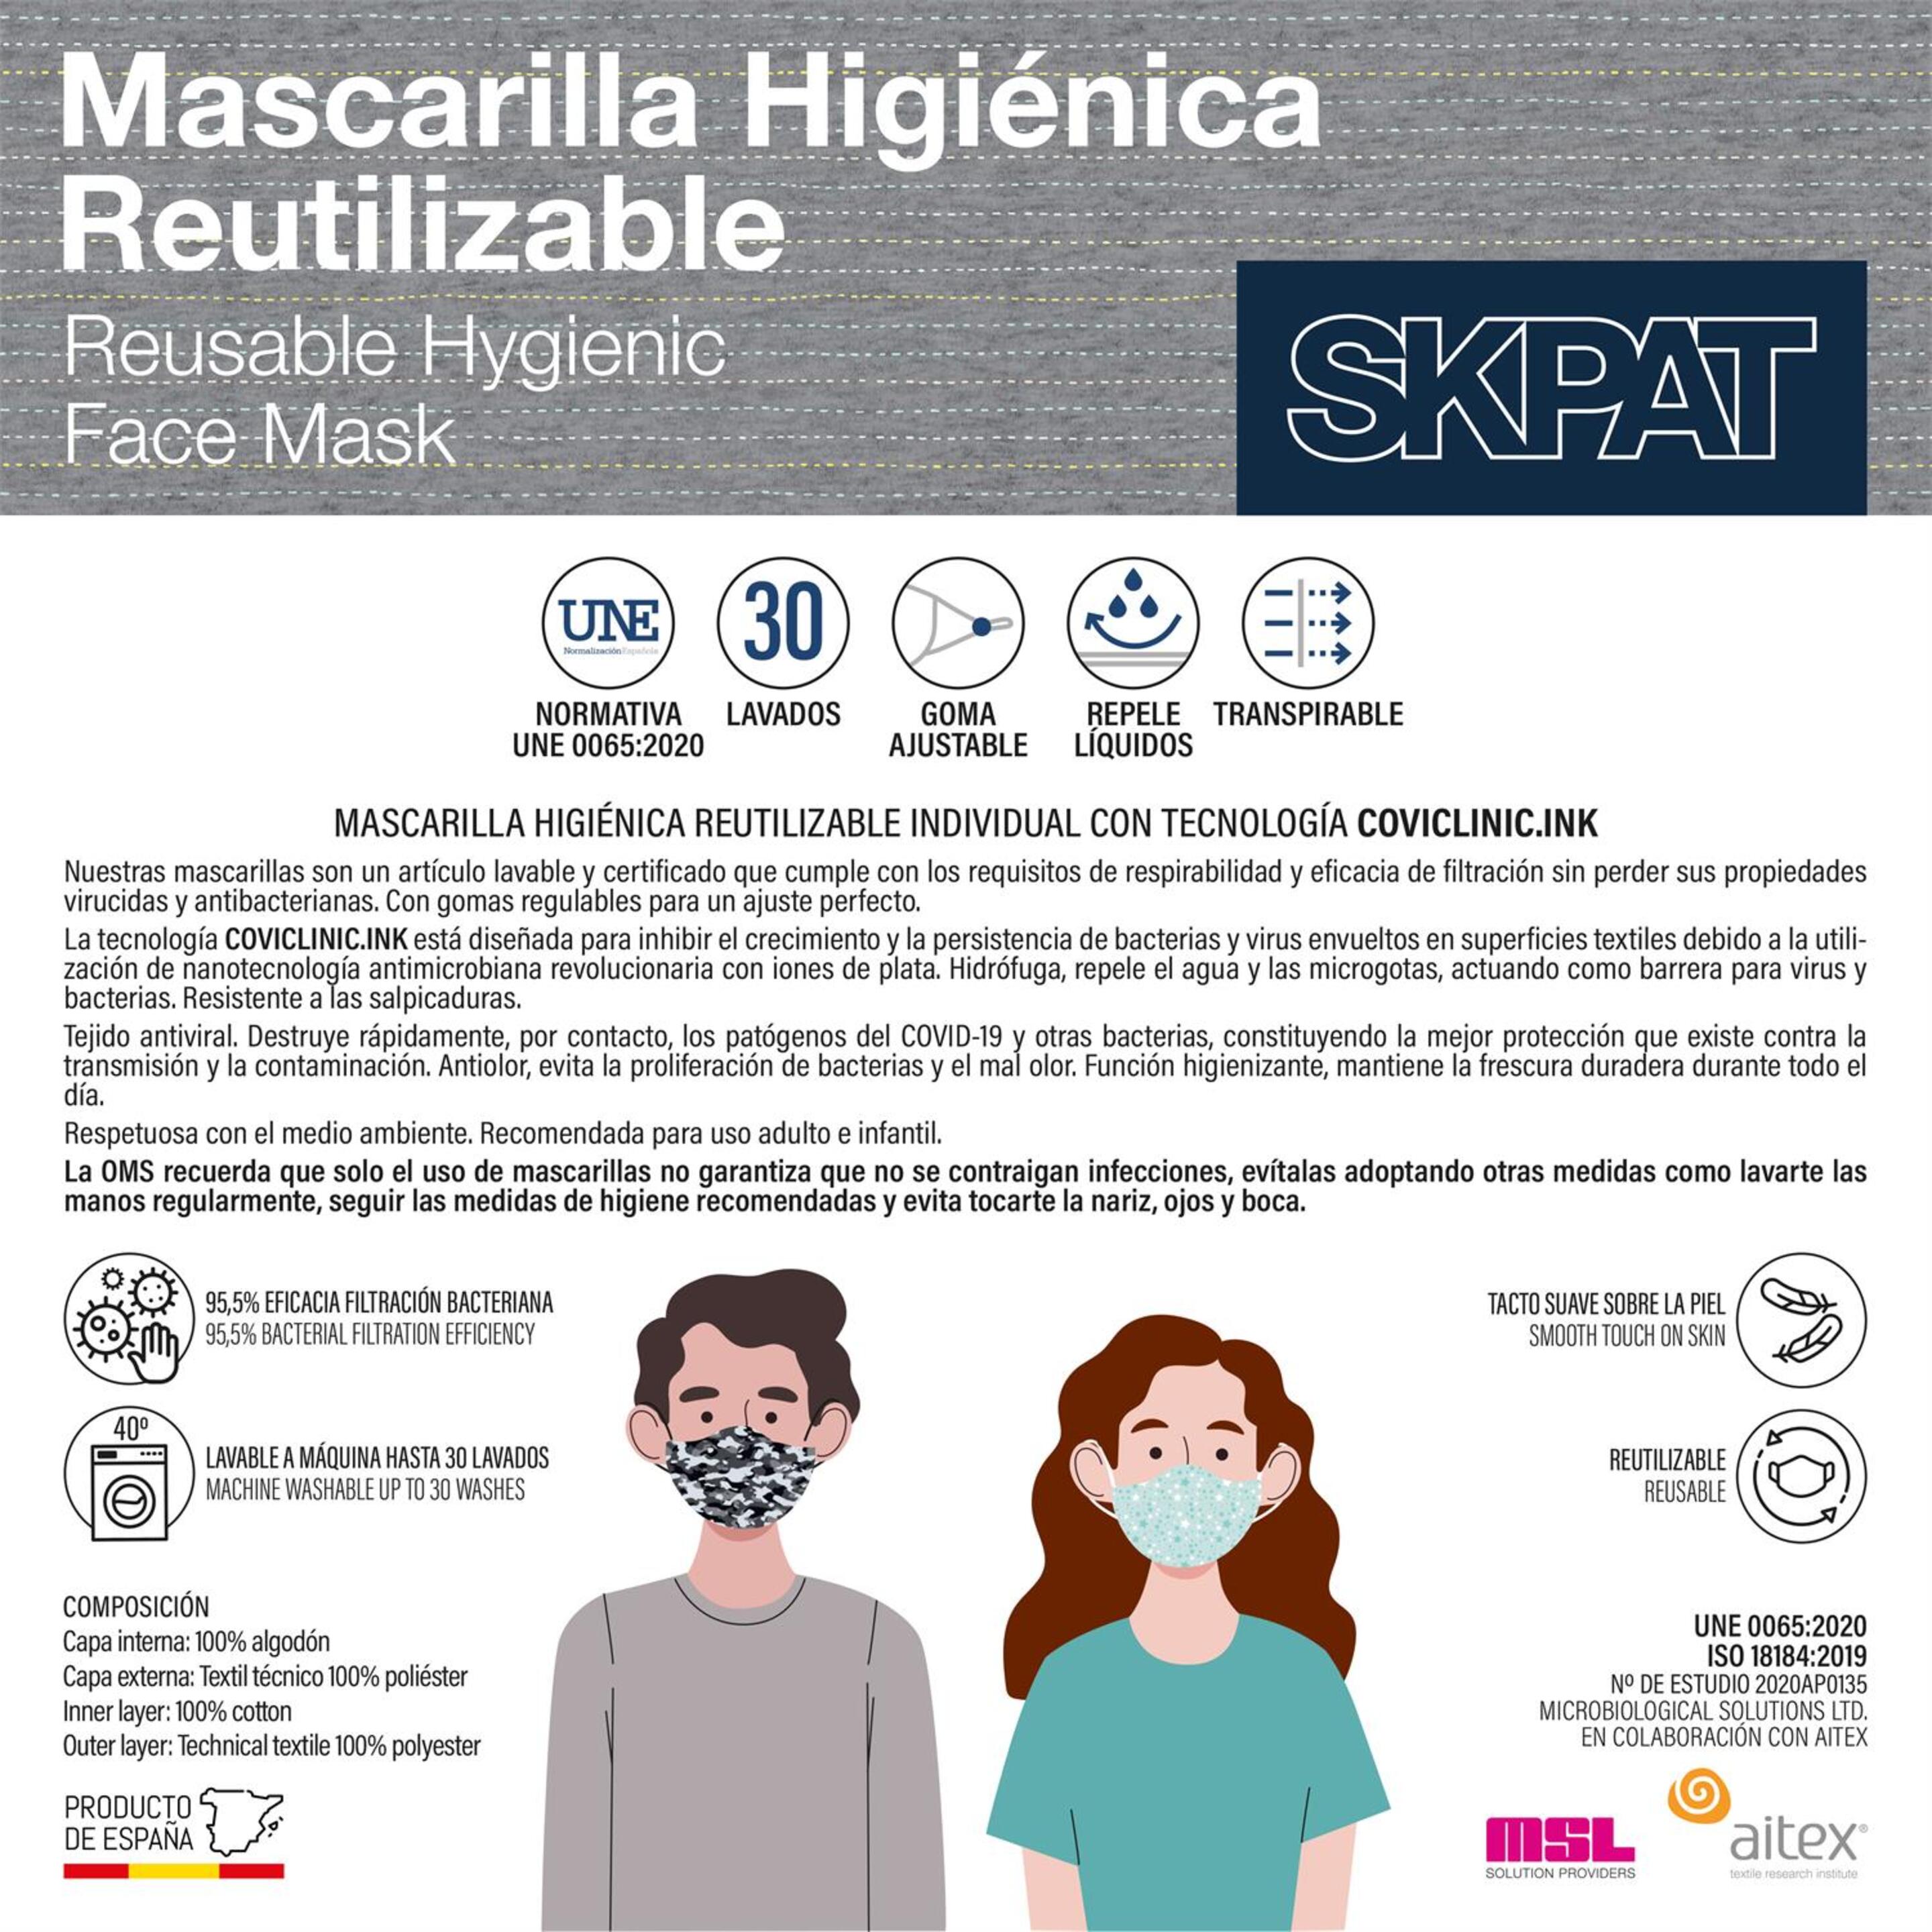 Mascarilla Higiénica Reutilizable Basic Skpat